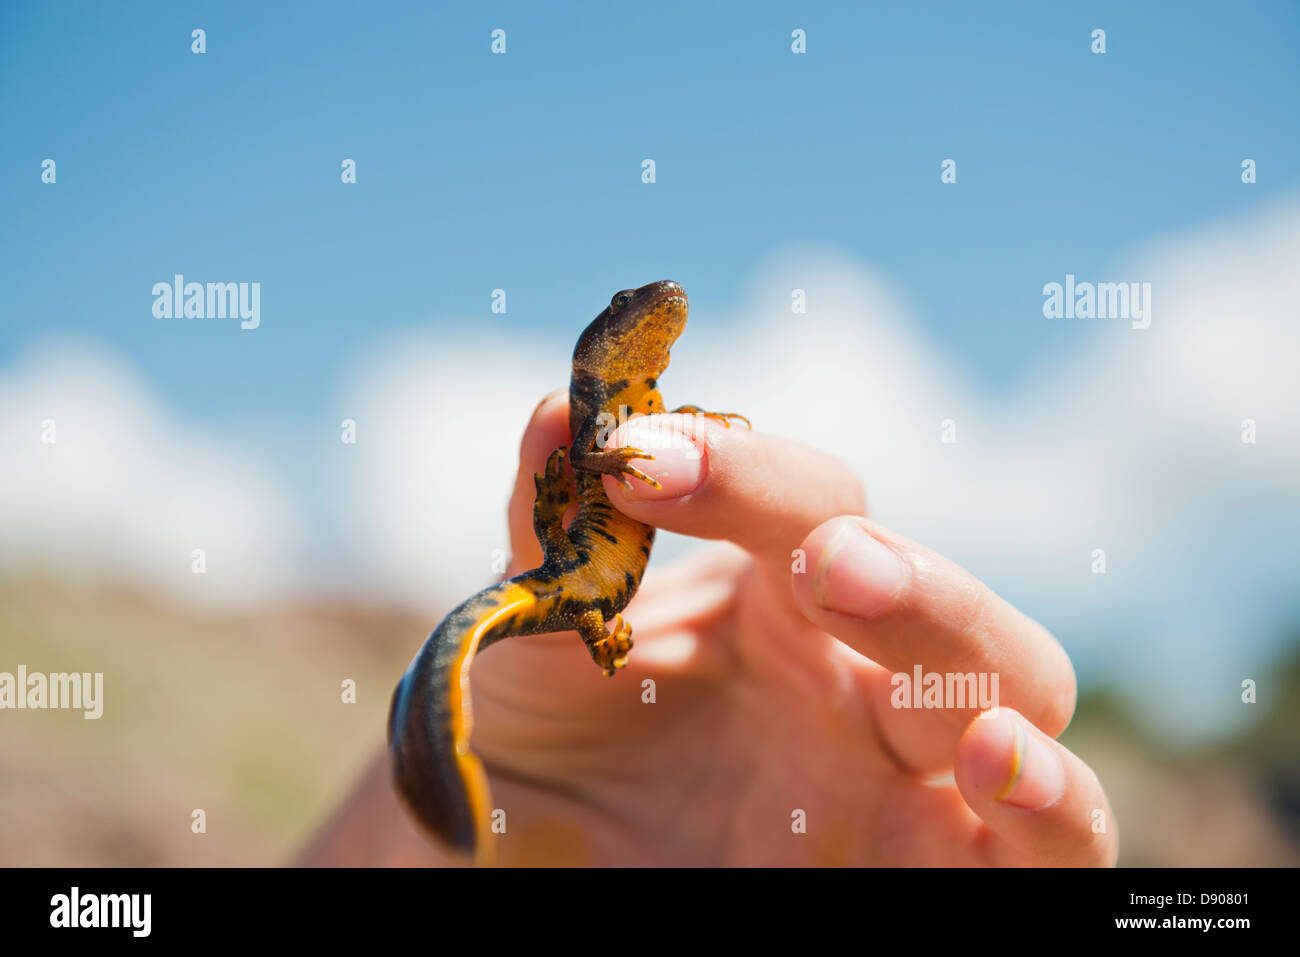 Hand holding lizard, close-up Stock Photo